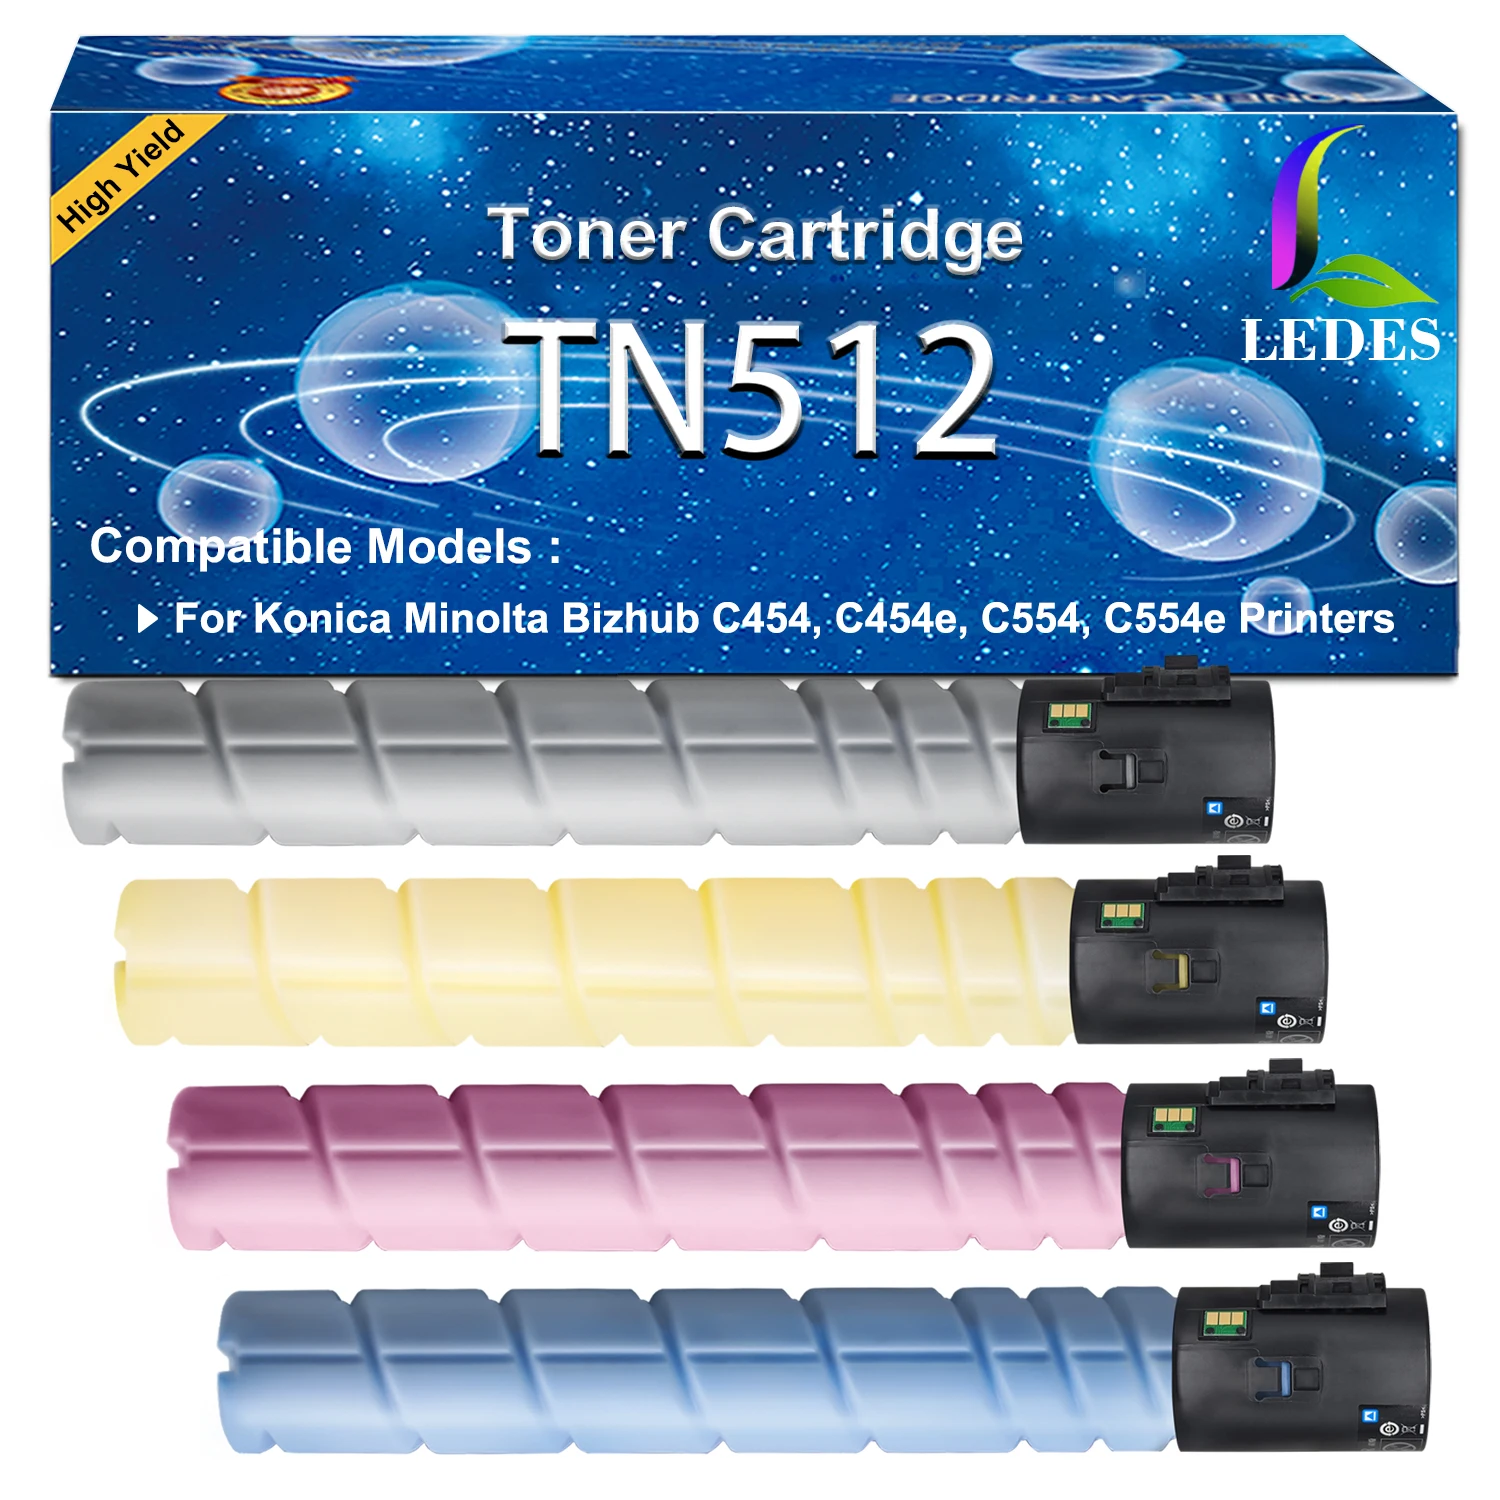 

TN512 TN-512 Compatible Toner Cartridge for Konica Minolta Bizhub C554 C554e C454 C454e Copier Toner Cartridge